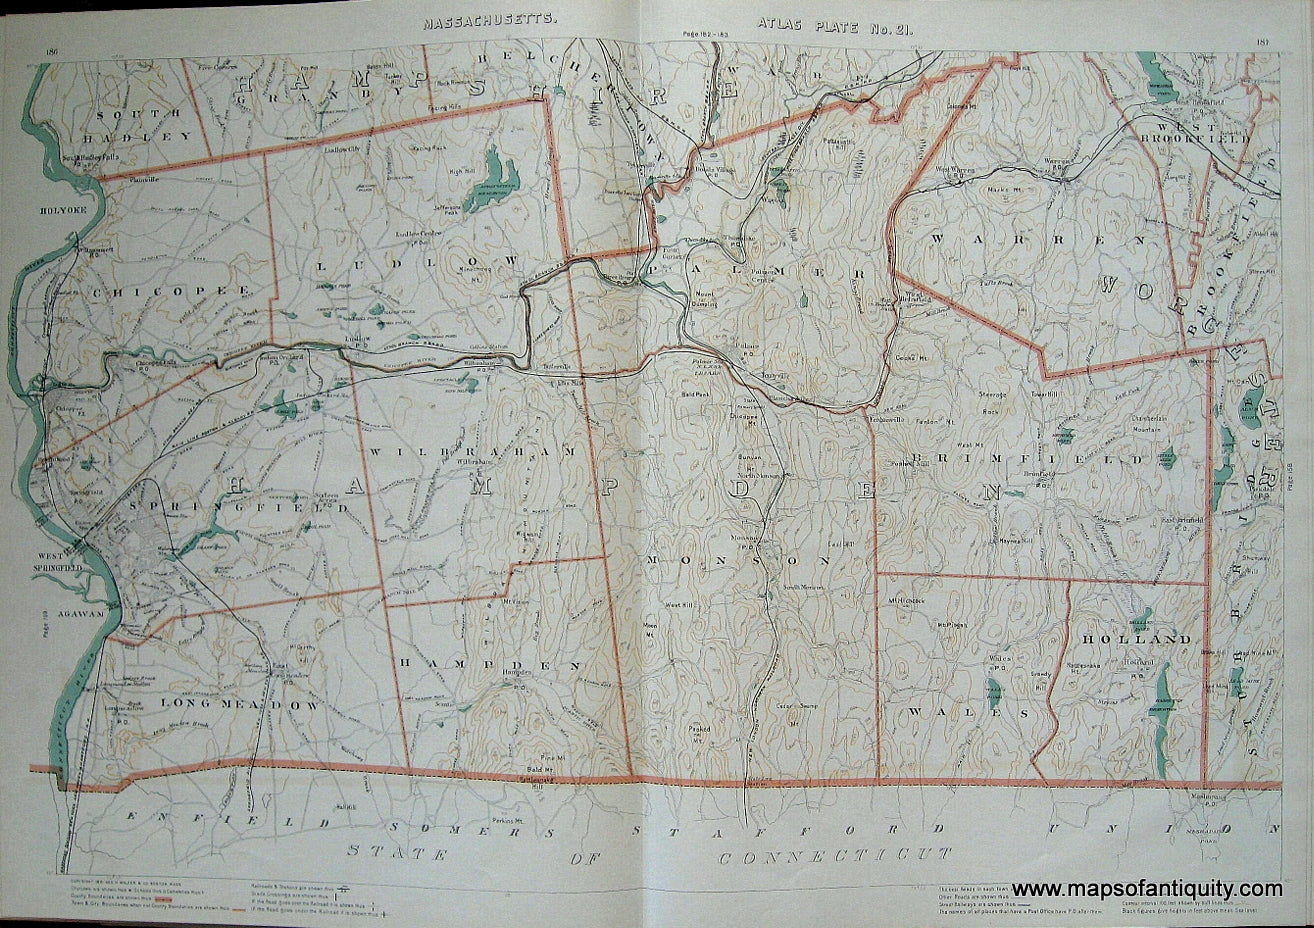 Antique-Printed-Color-Map-Massachusetts-Atlas-Plate-No.-21-US-Massachusetts-Massachusetts-General-1891-G.-H.-Walker-Maps-Of-Antiquity